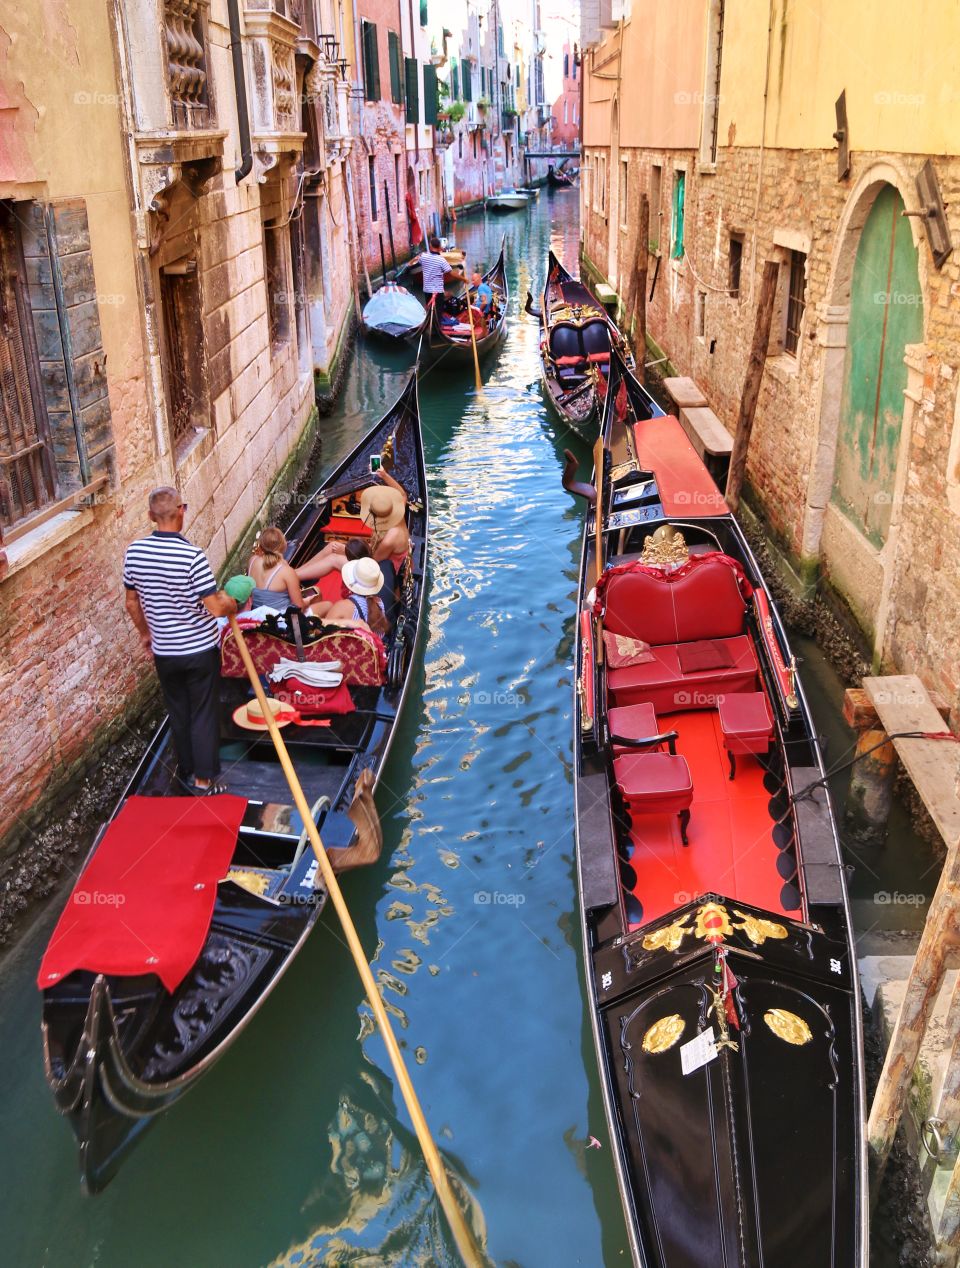 On a gondola along the canal of Venice